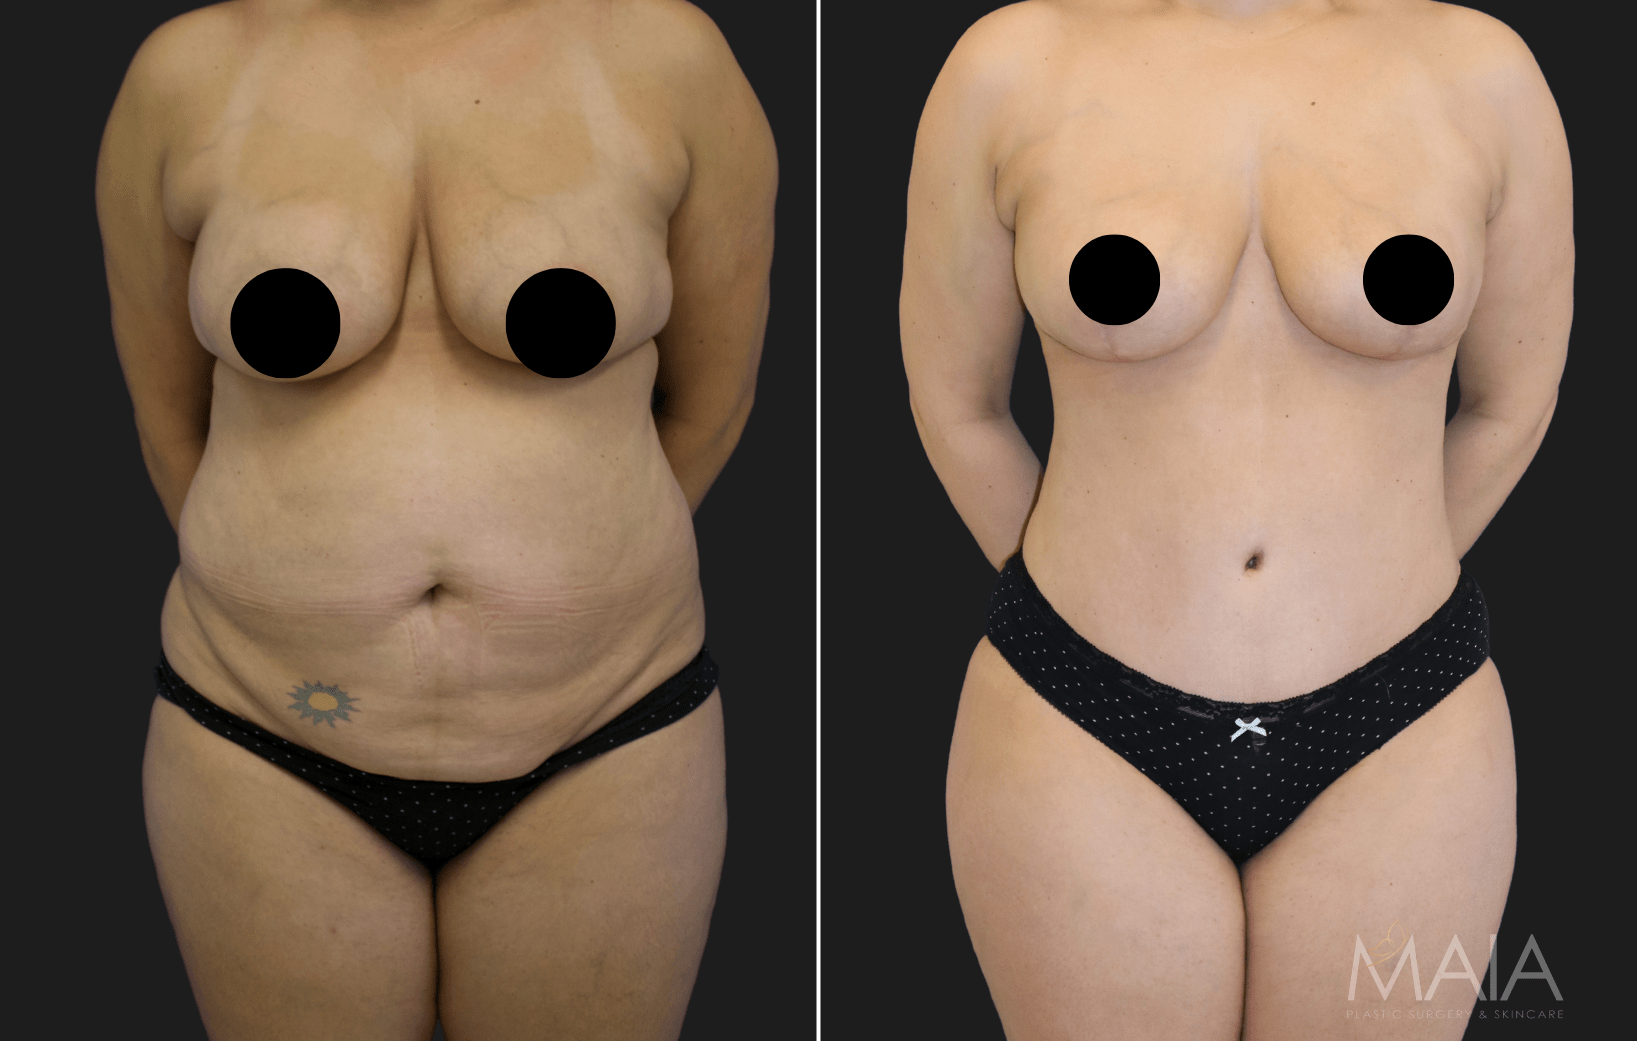 Post-Op Tummy Tuck progress. Massive swelling occurred between